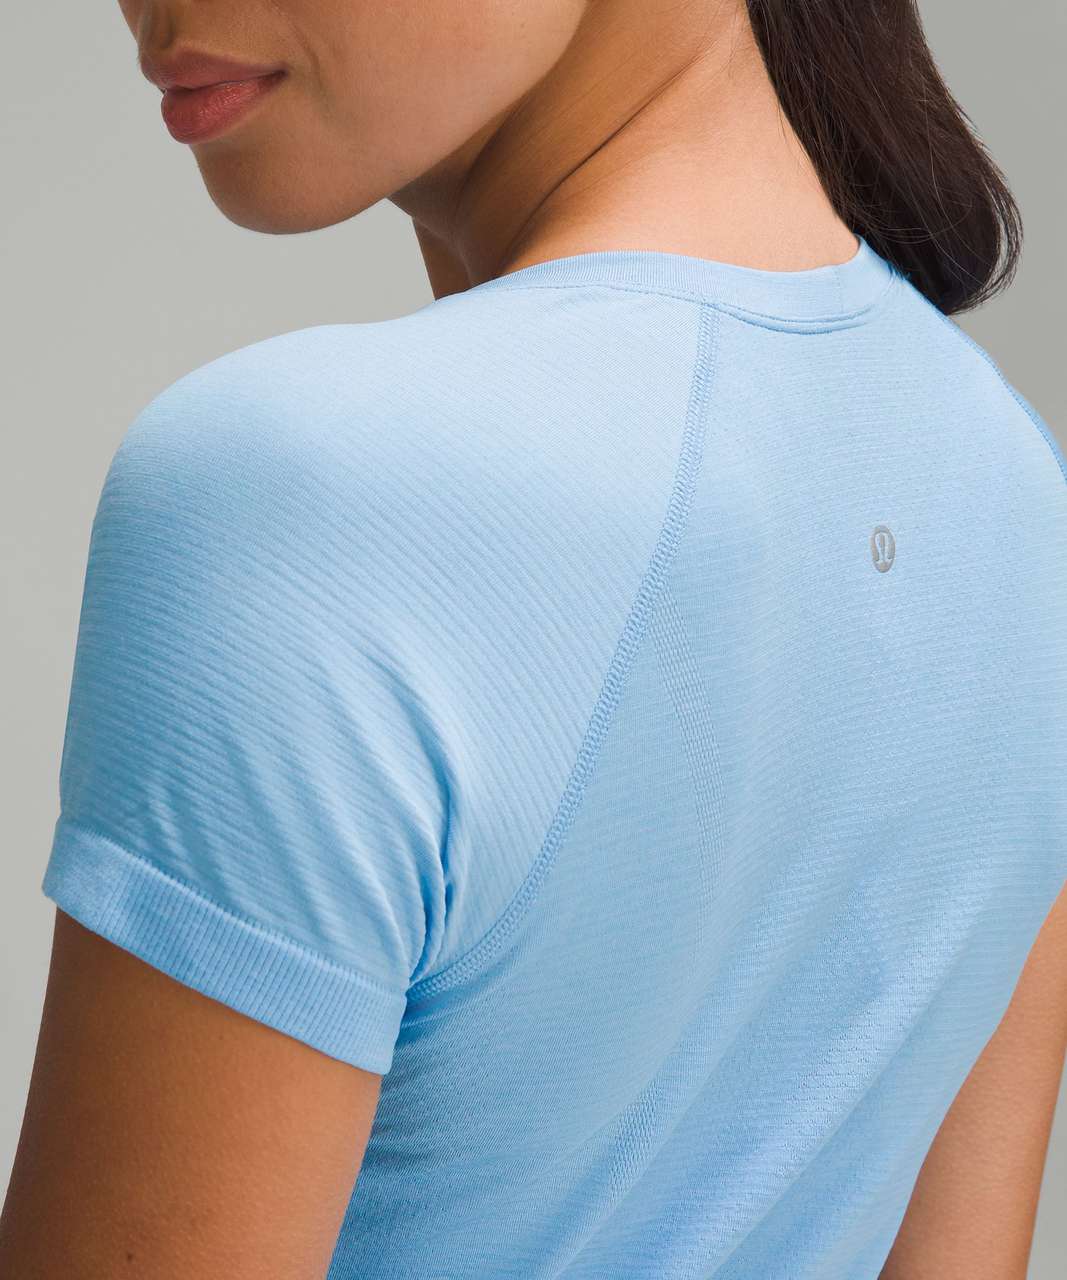 Lululemon Swiftly Tech Short-Sleeve Shirt 2.0 - Aero Blue / Aero Blue